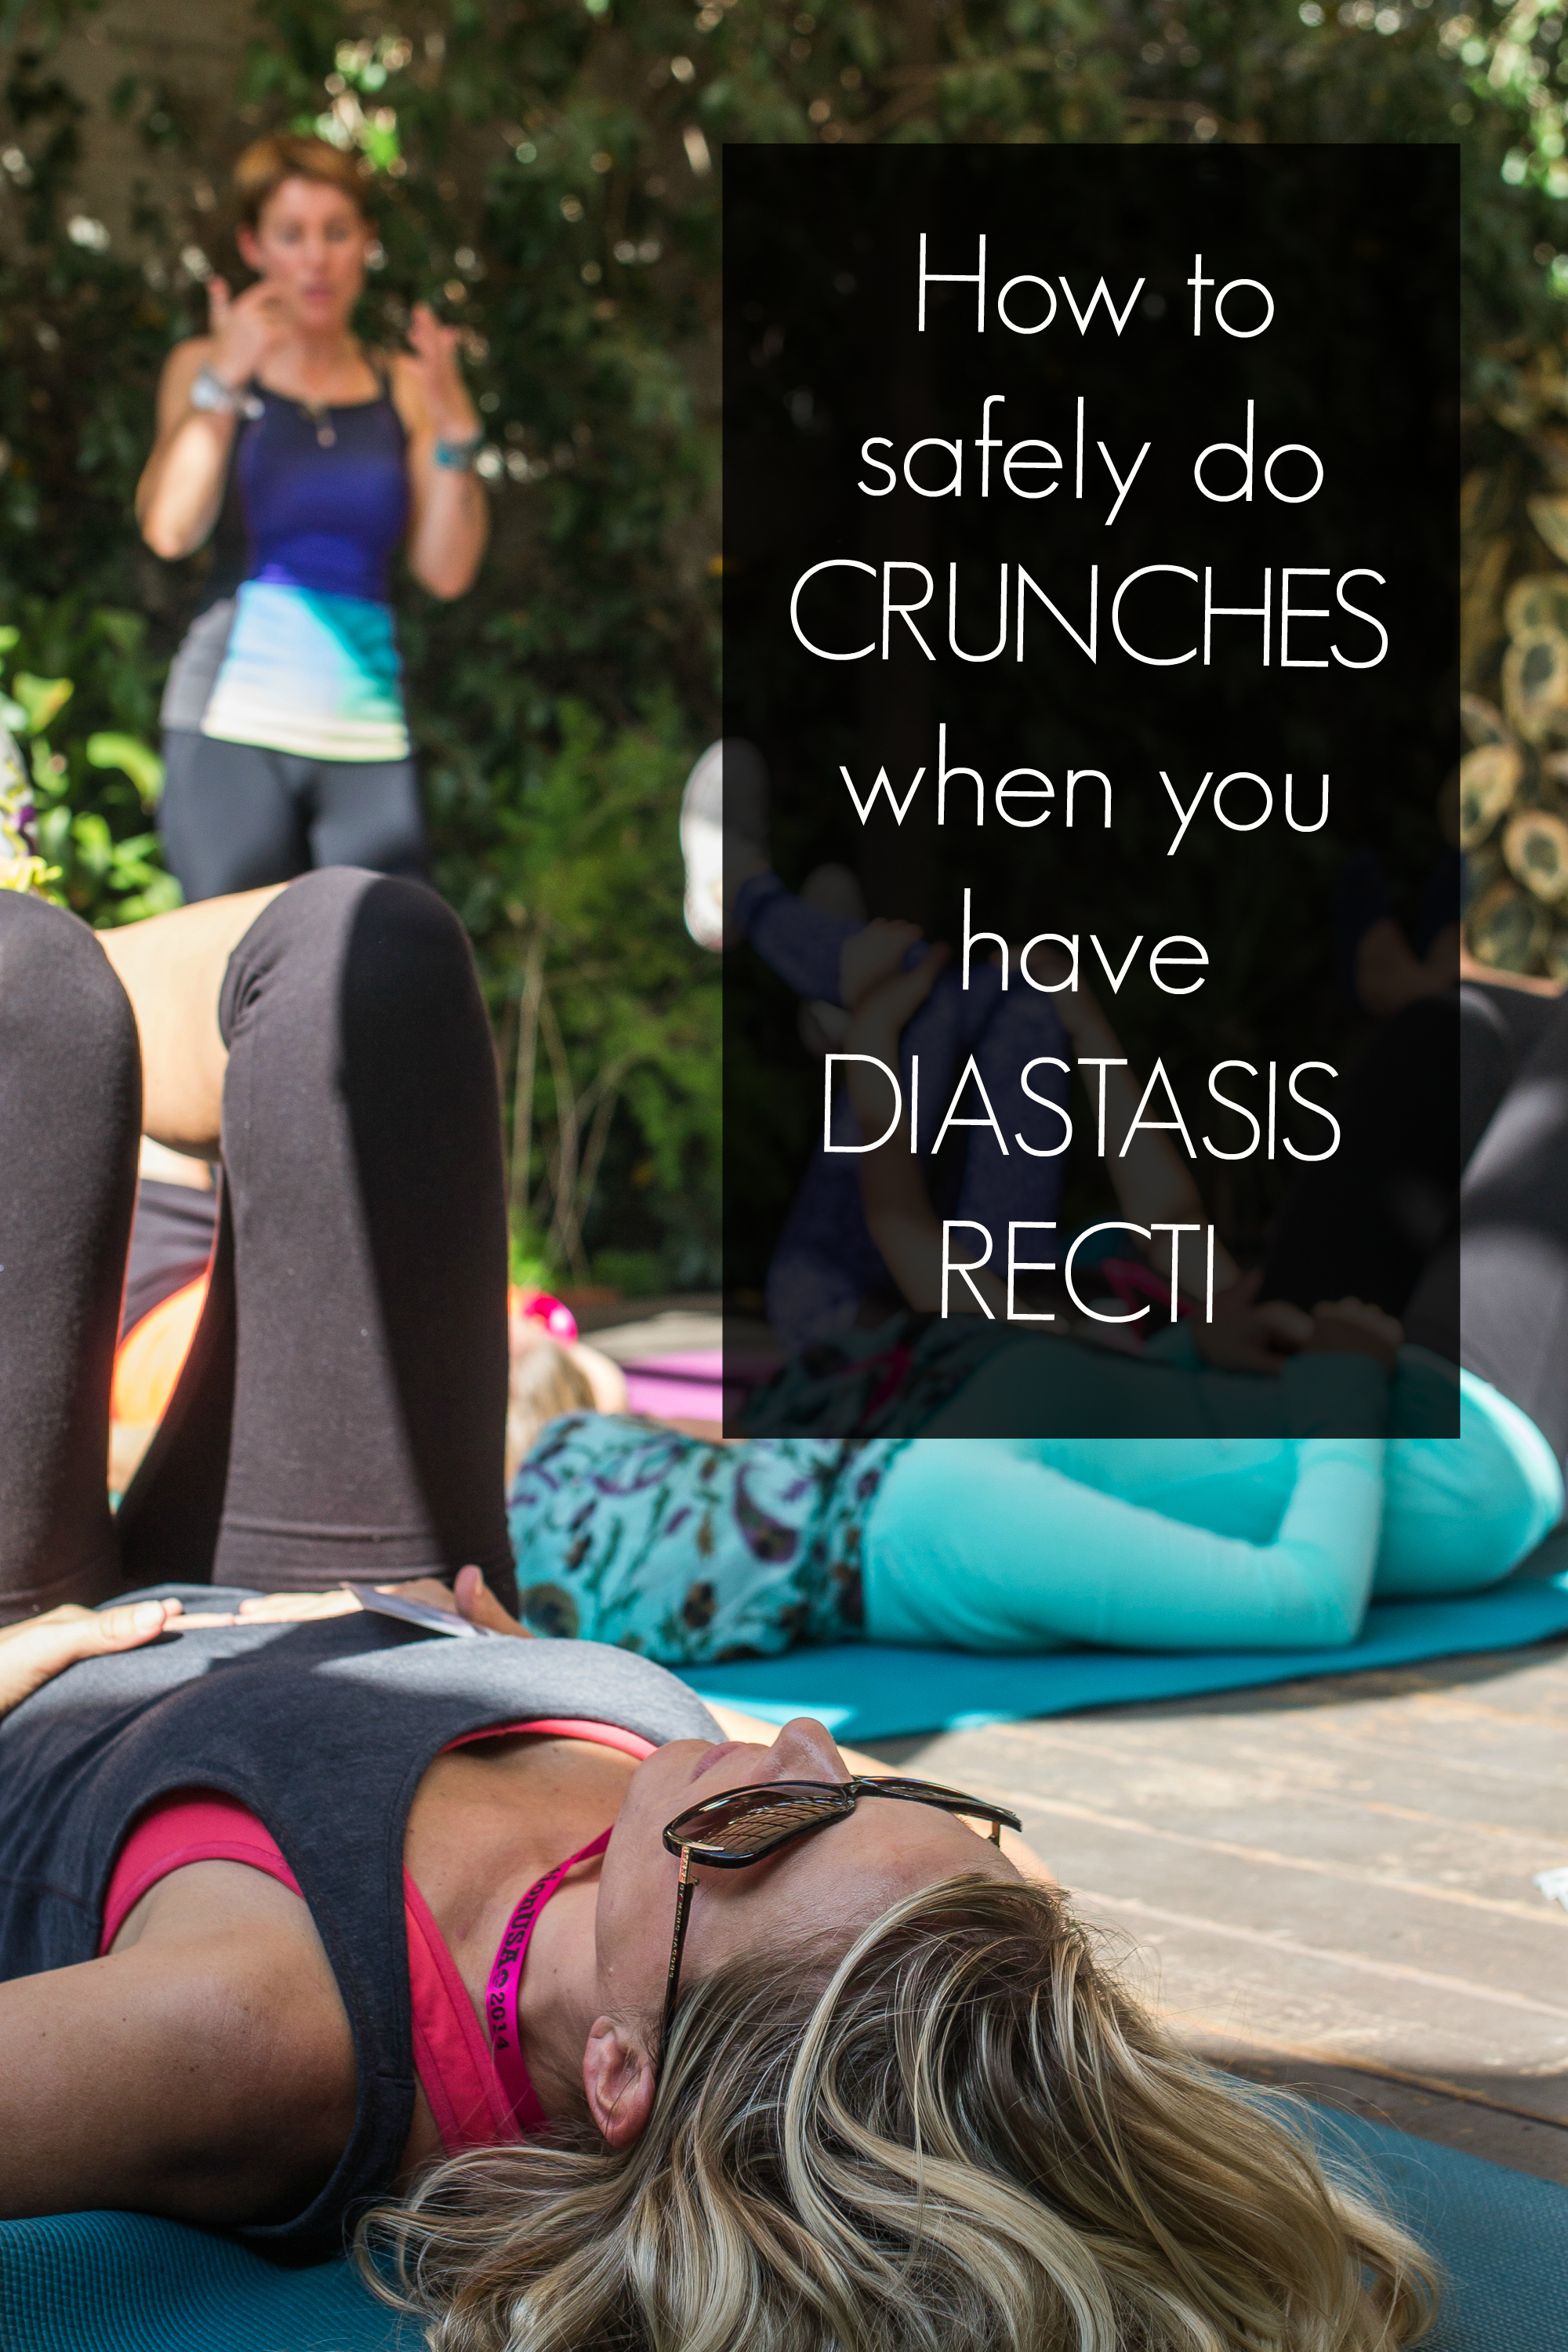 How to do crunches safely when you have diastasis recti